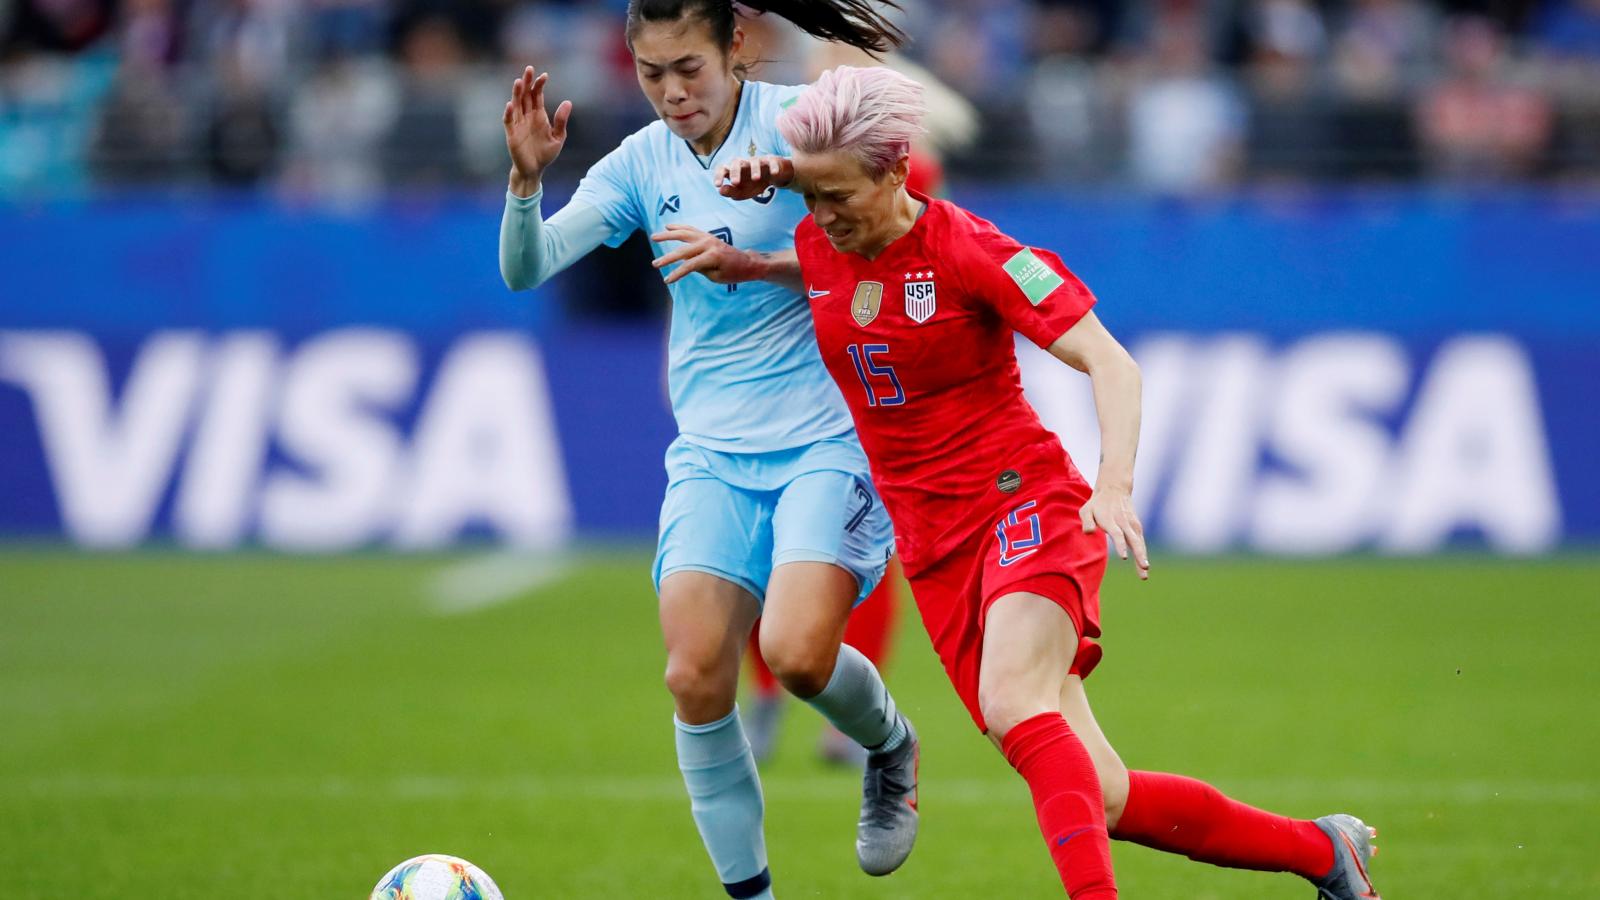 FIFA Women's World Cup players deserve better